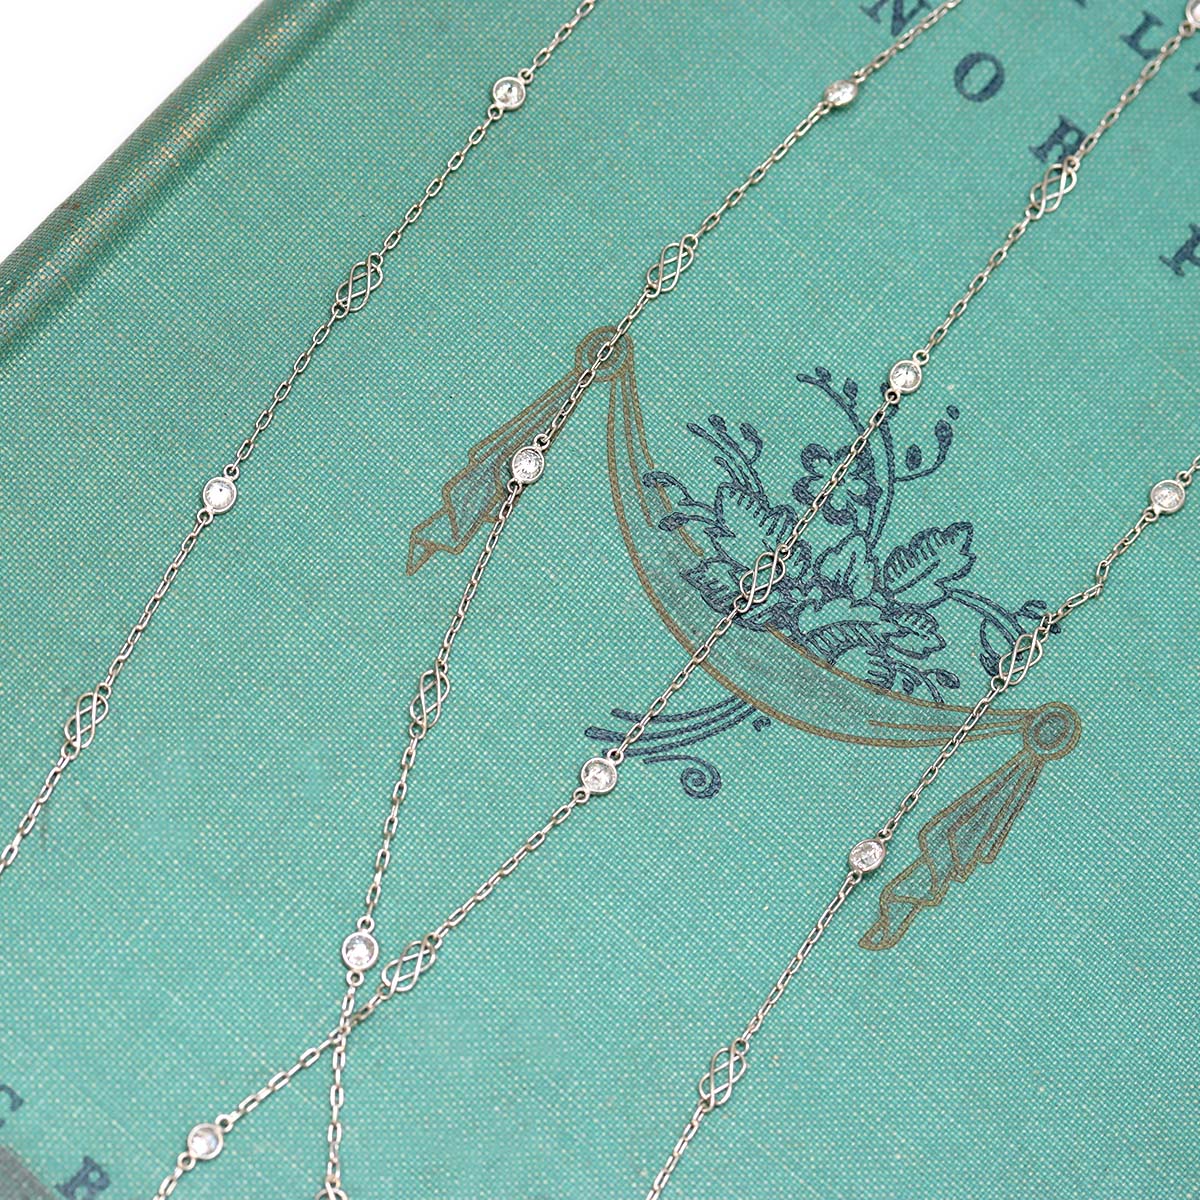 Handmade Diamond and Filigree Chain Necklace #VC221103-1